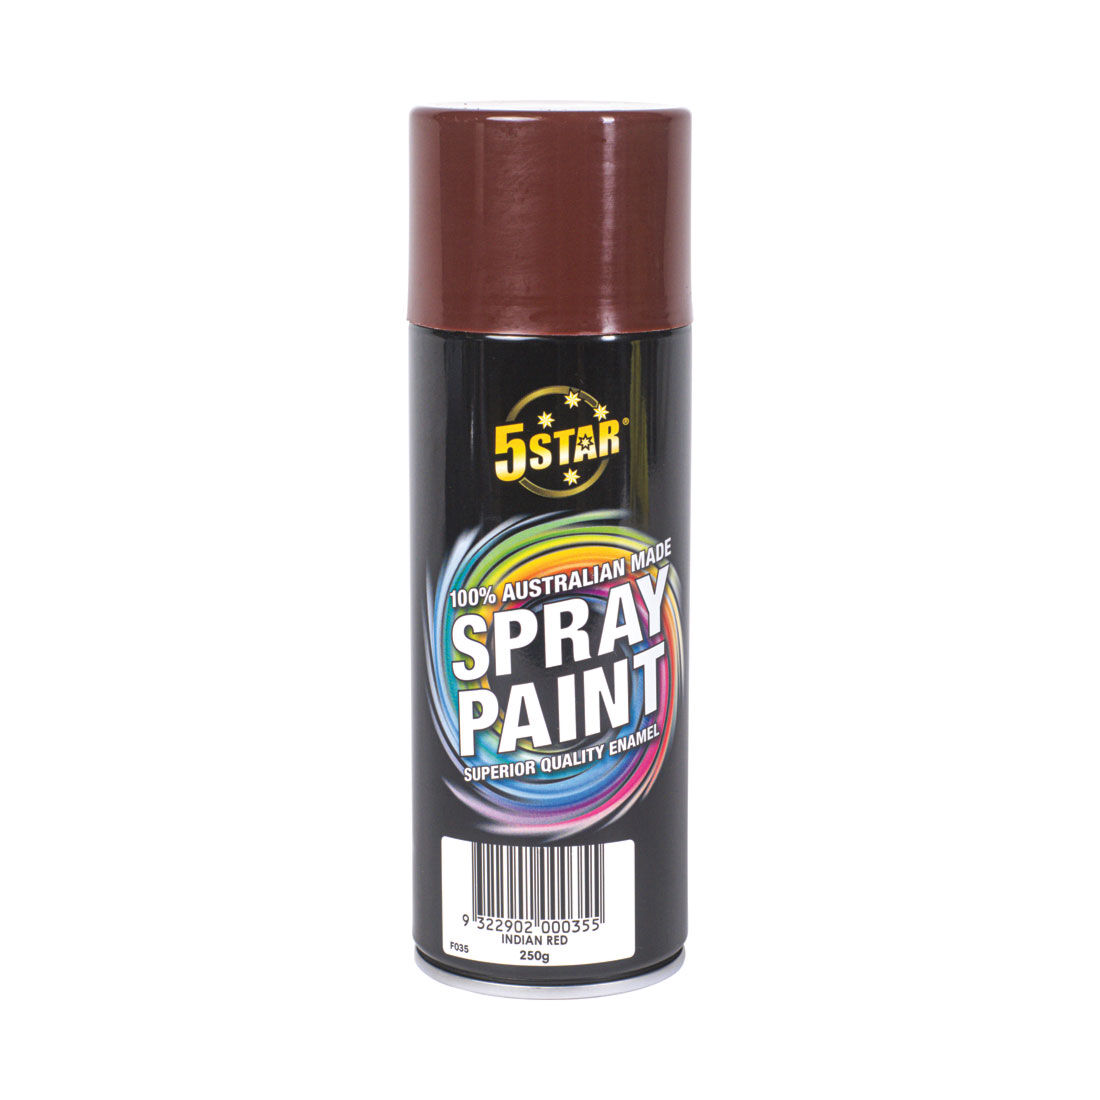 5 Star Enamel Spray Paint Indian Red 250g, , scaau_hi-res